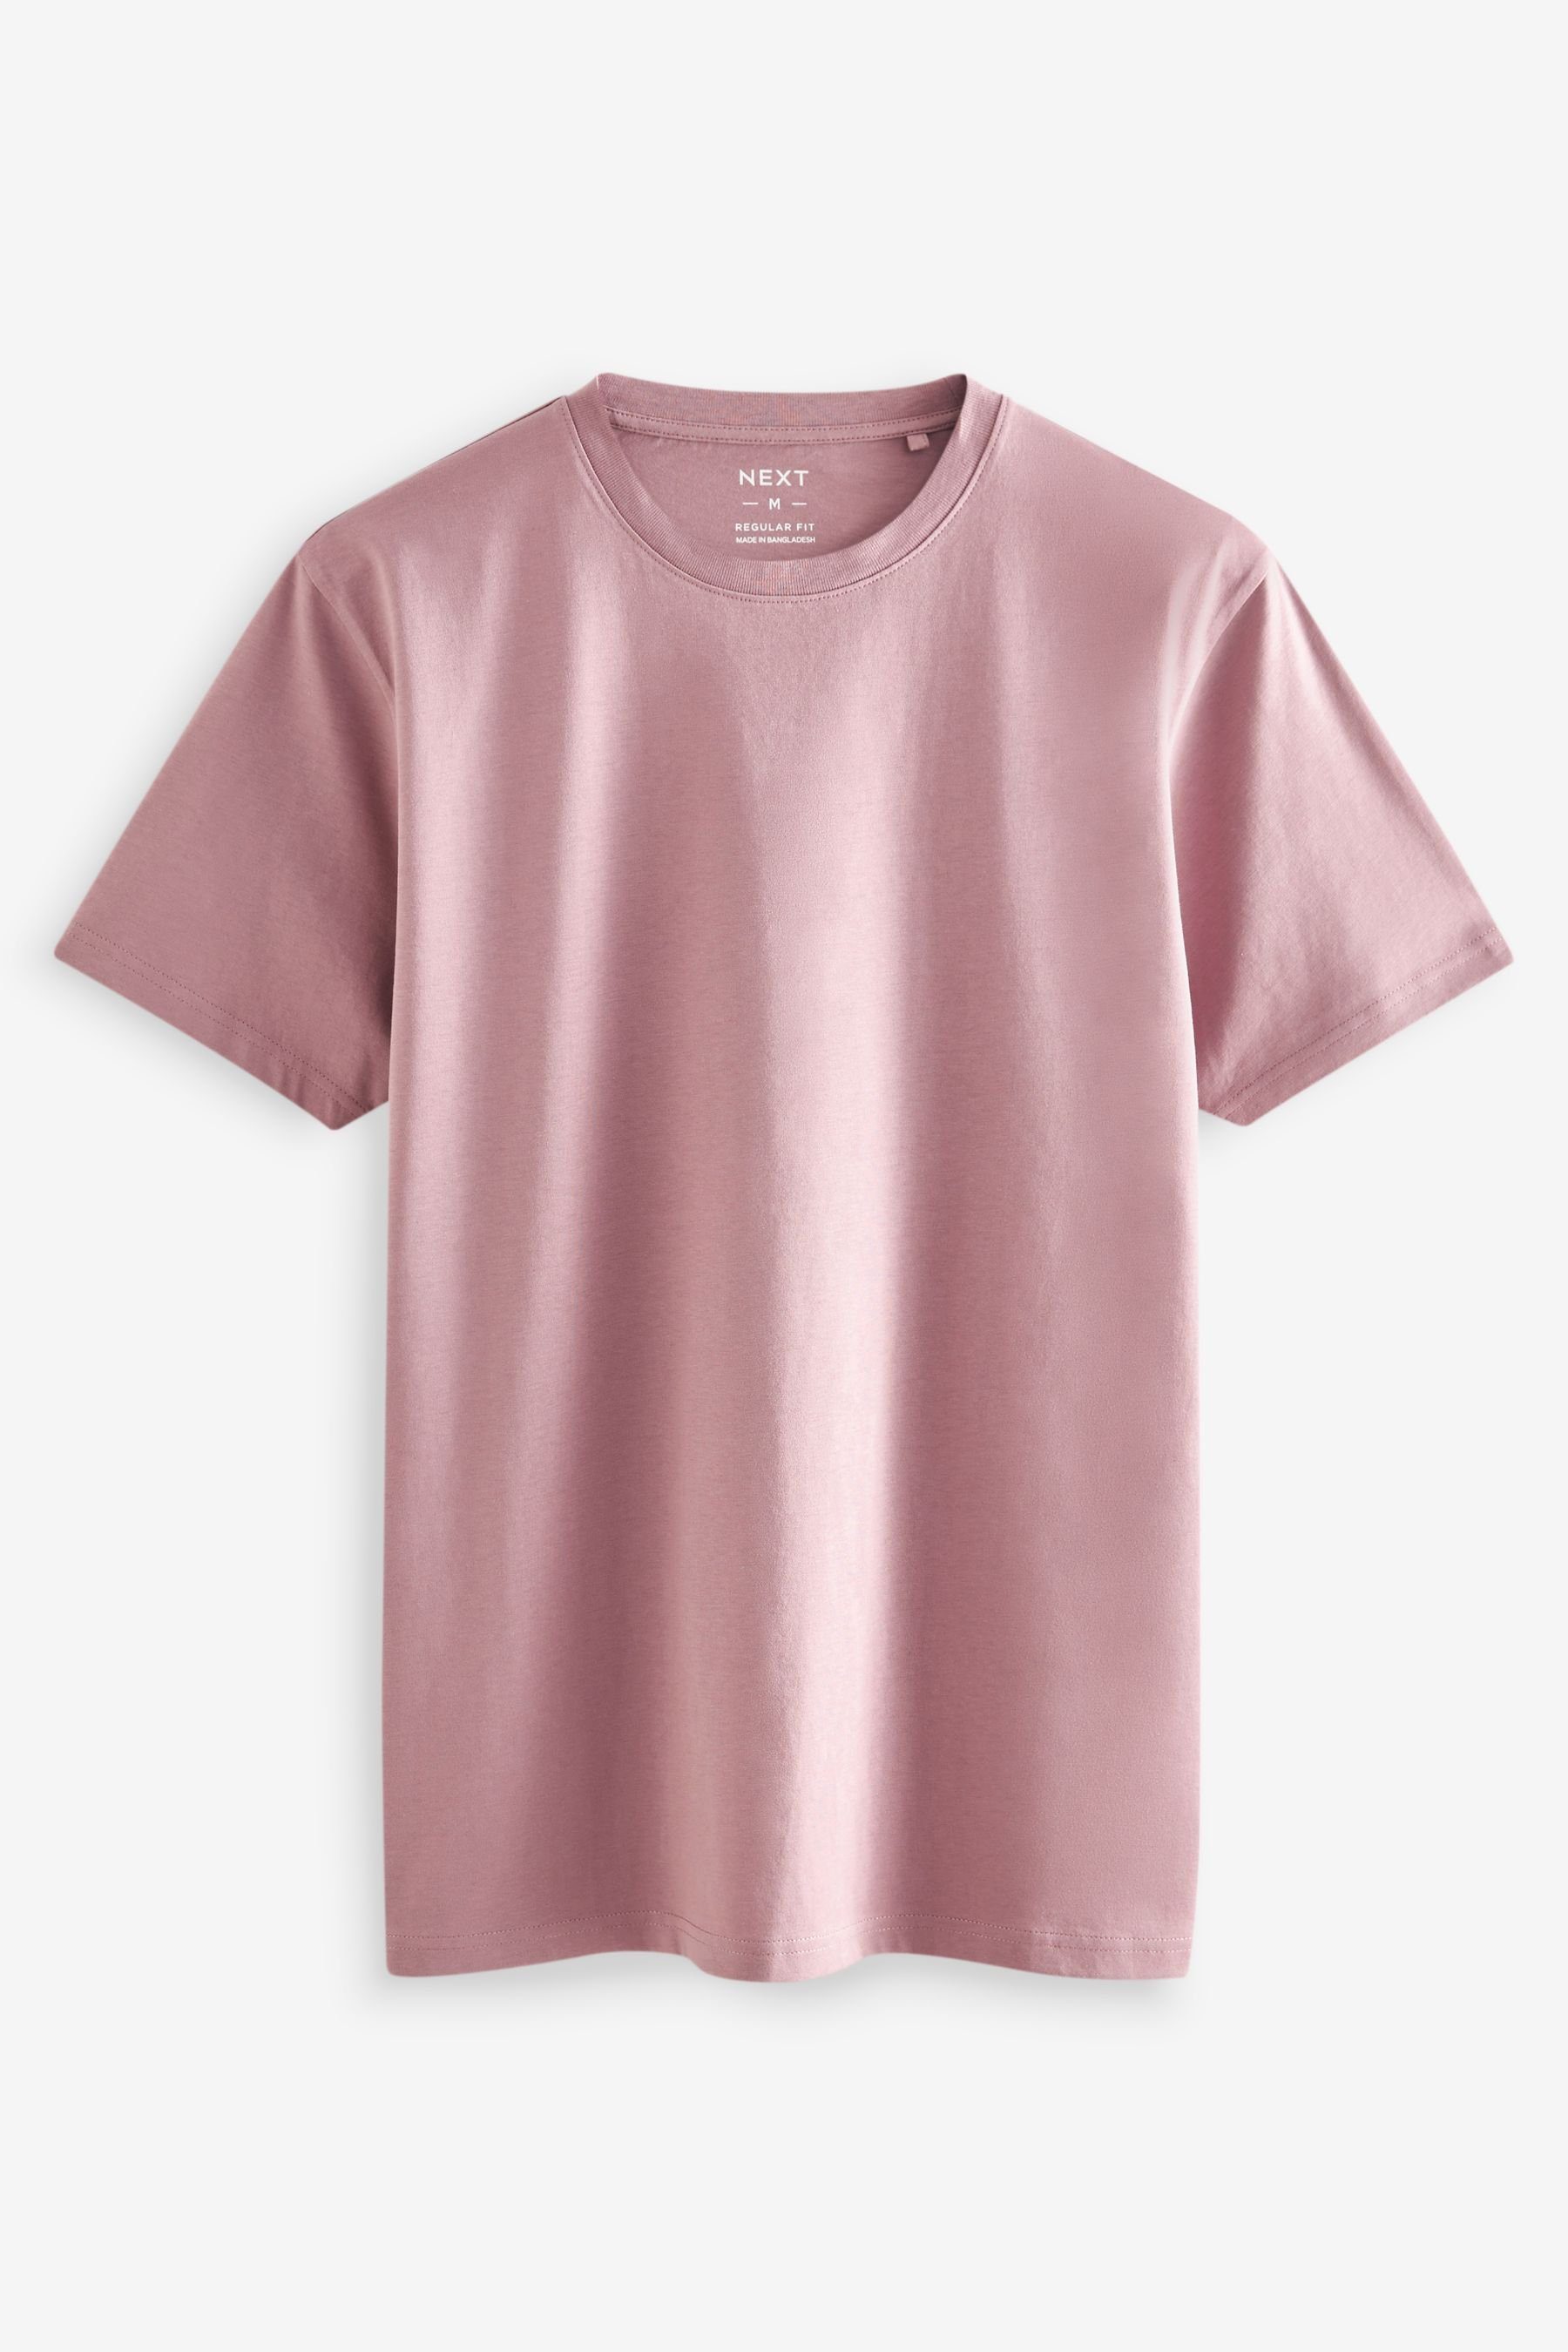 (6-tlg) T-Shirts Grey/Black/Blue/Light Blue/White/Pink Next T-Shirt 6er-Pack